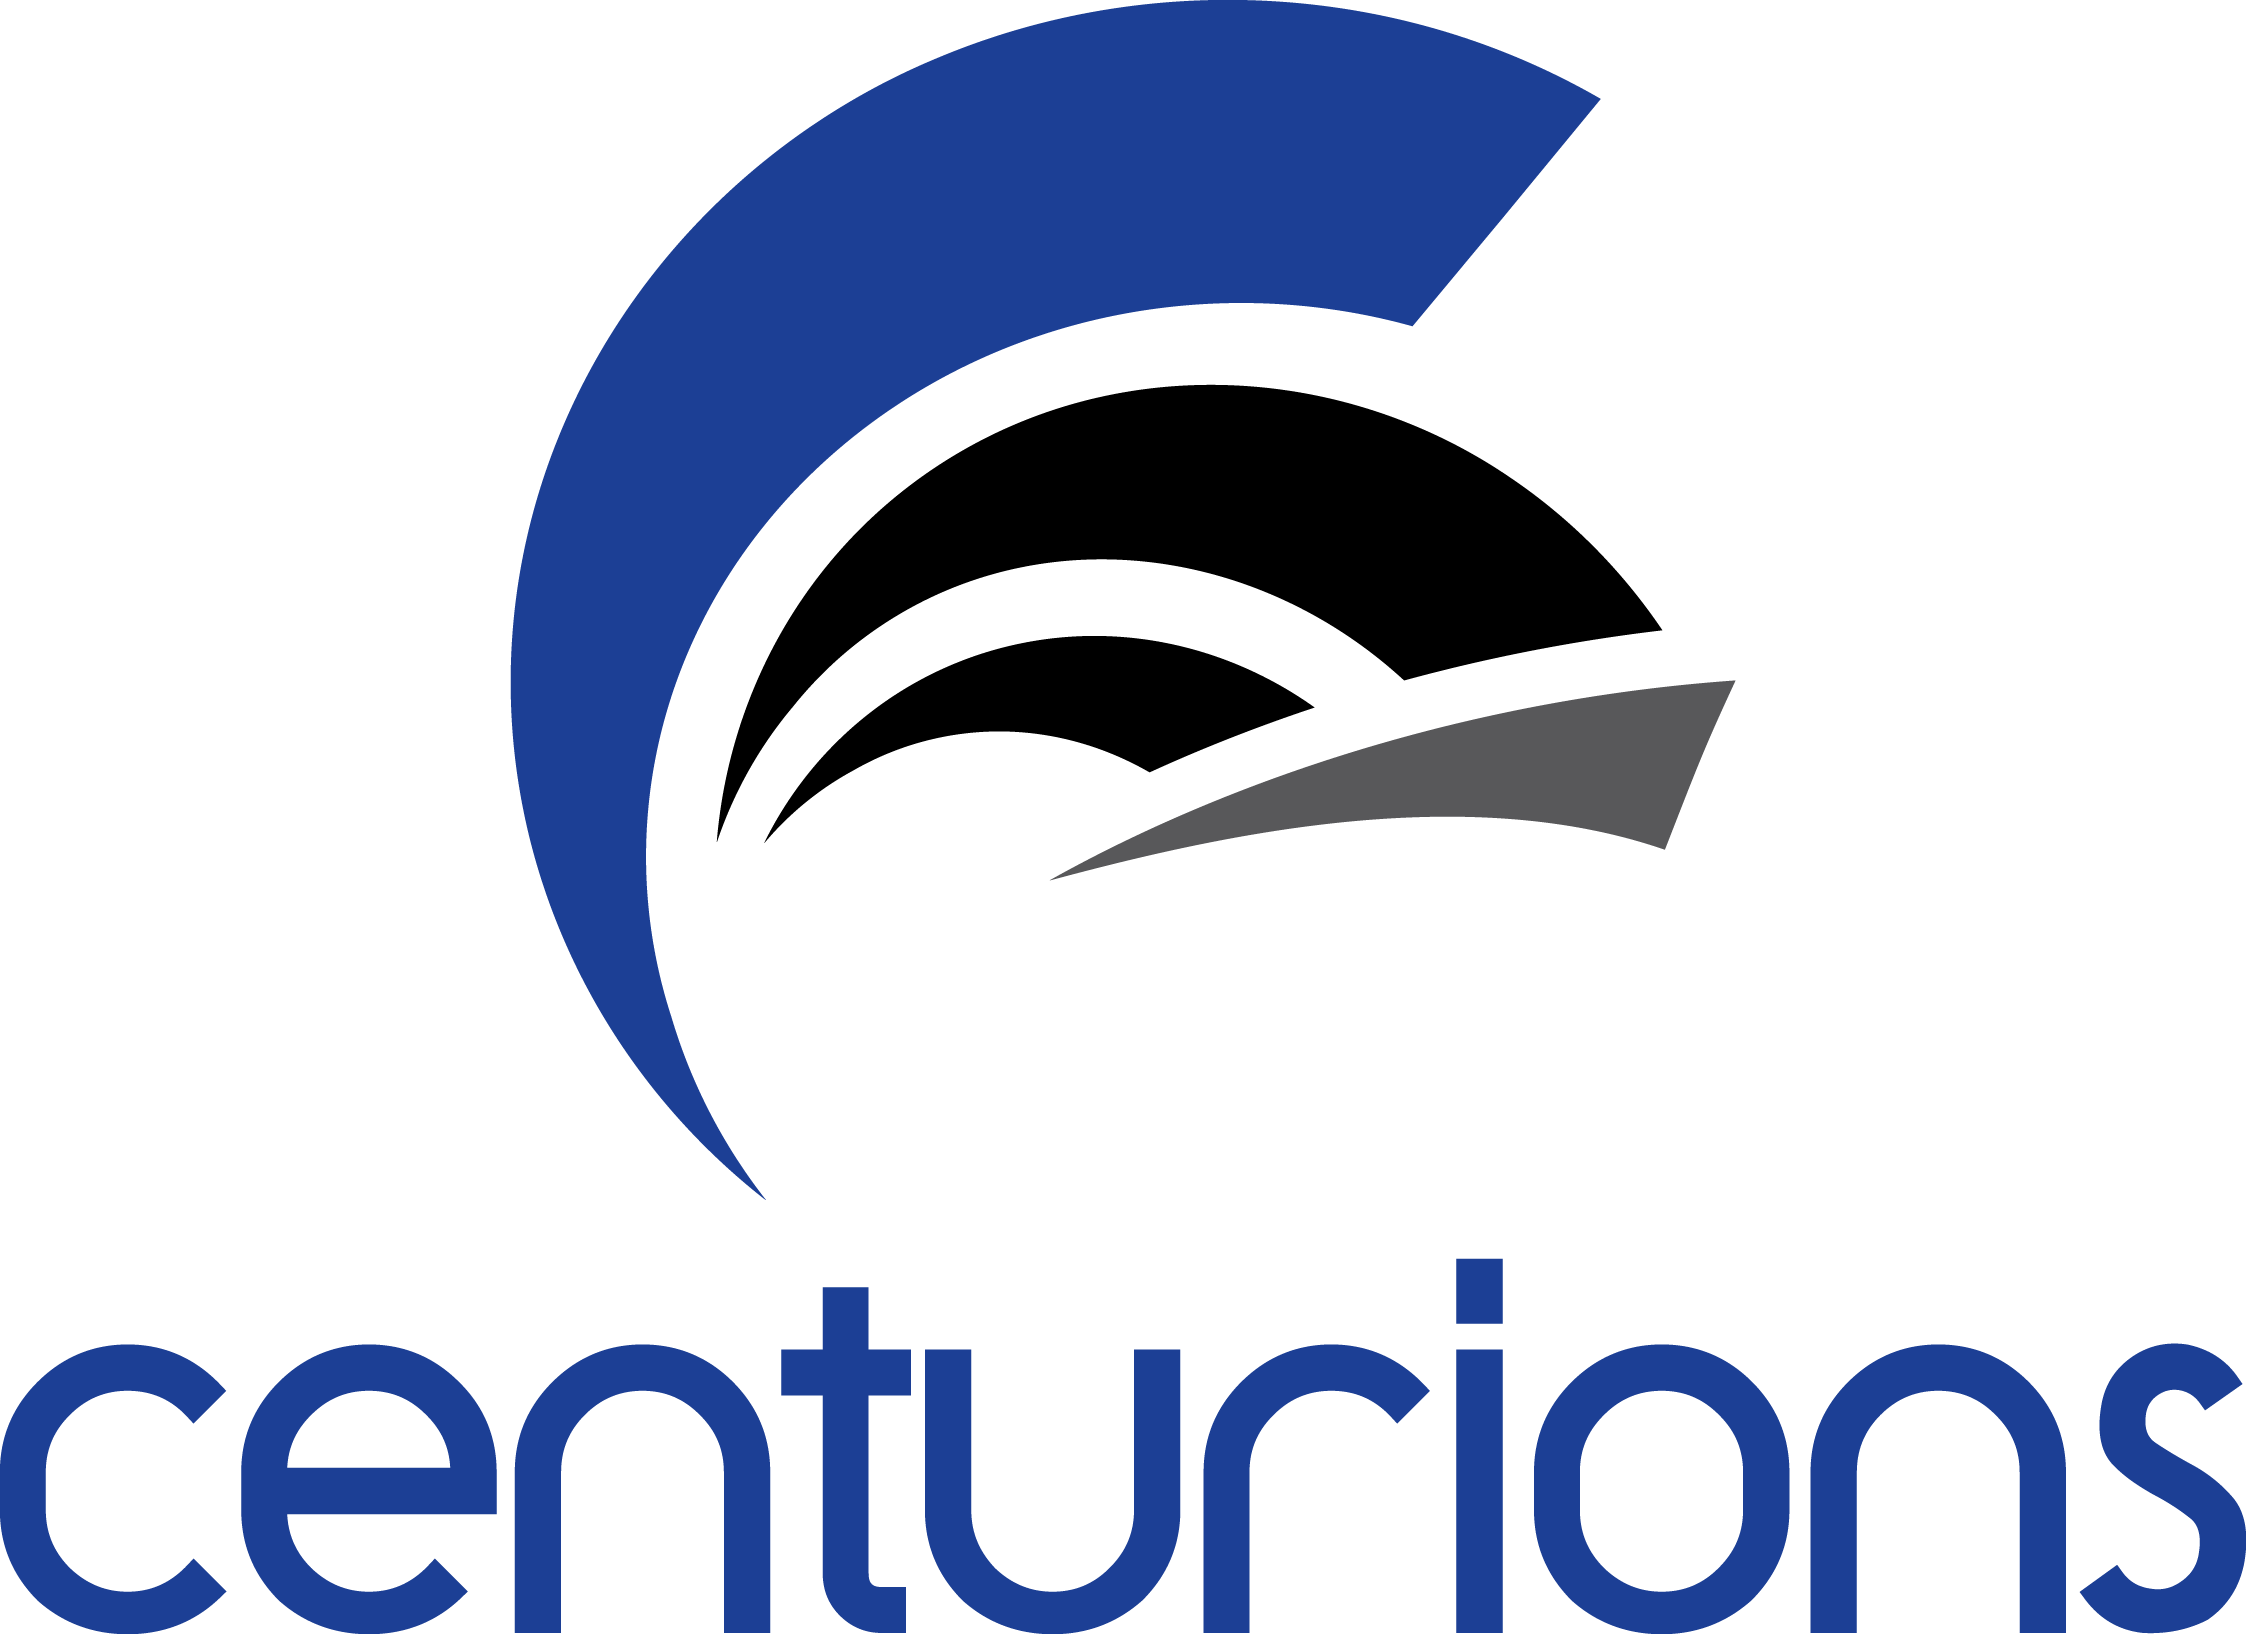 Centurian Logo - File:Centurion sports logo.png - Wikimedia Commons